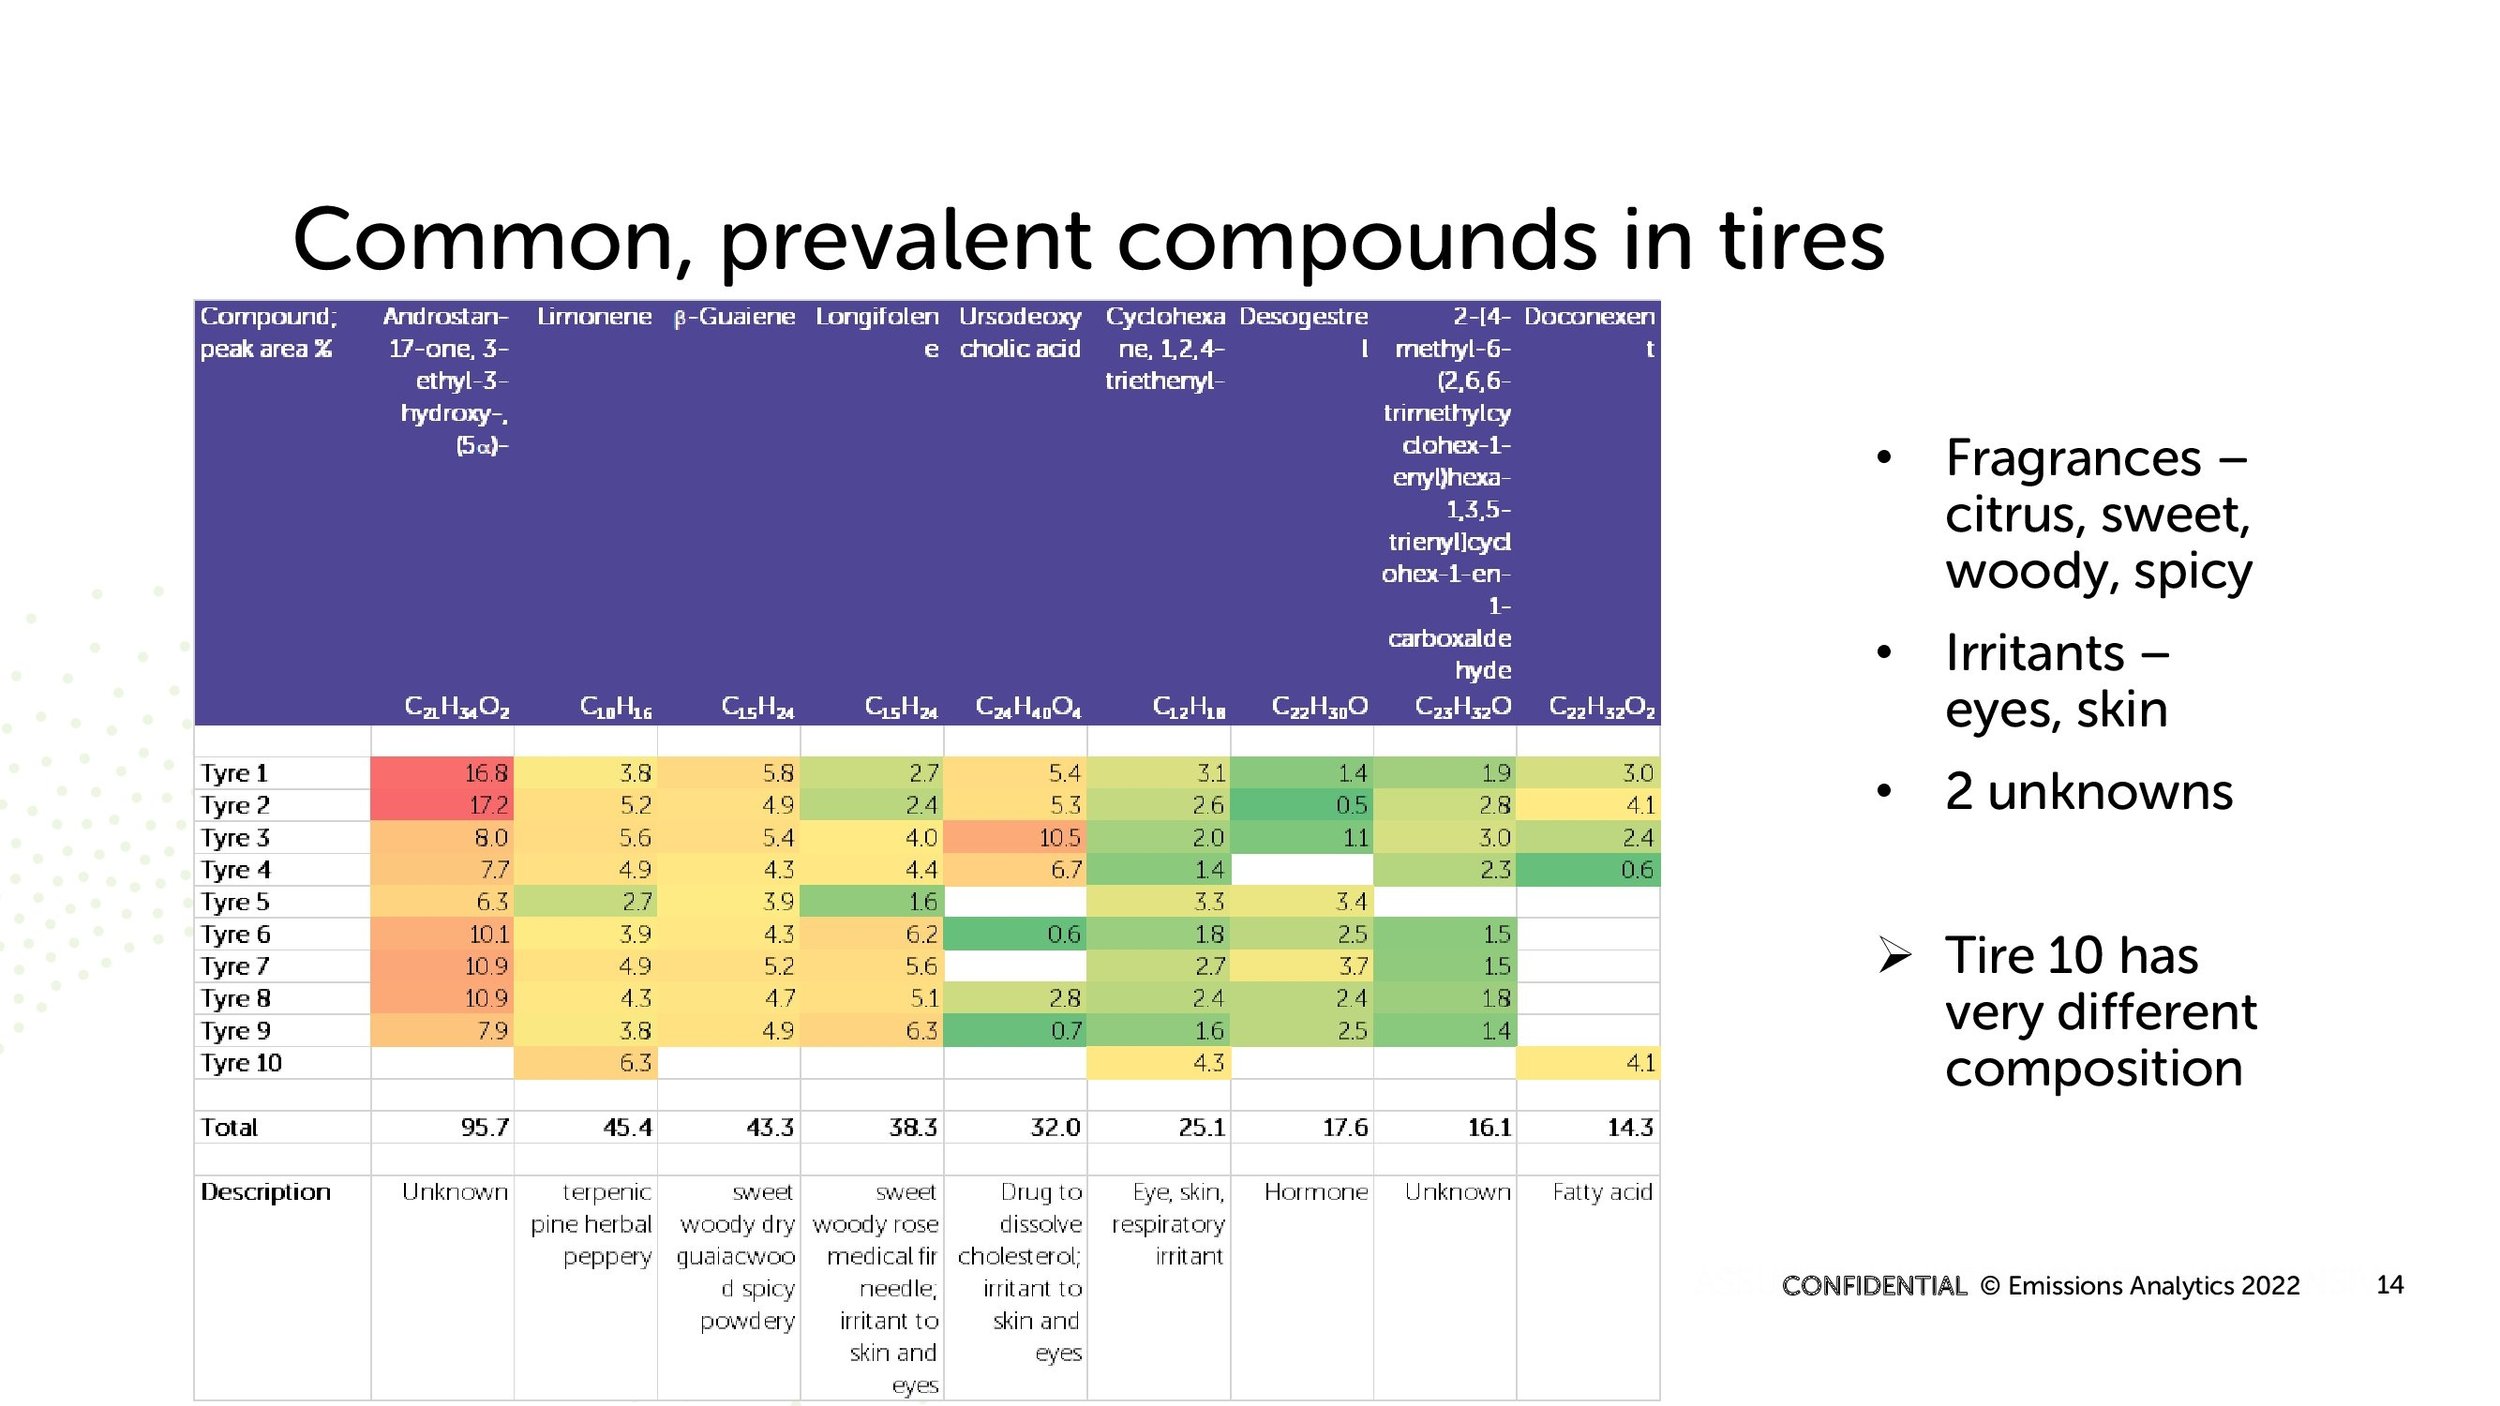 Emissions Analytics CRC tires presentation 16 March 2022_00014.jpg